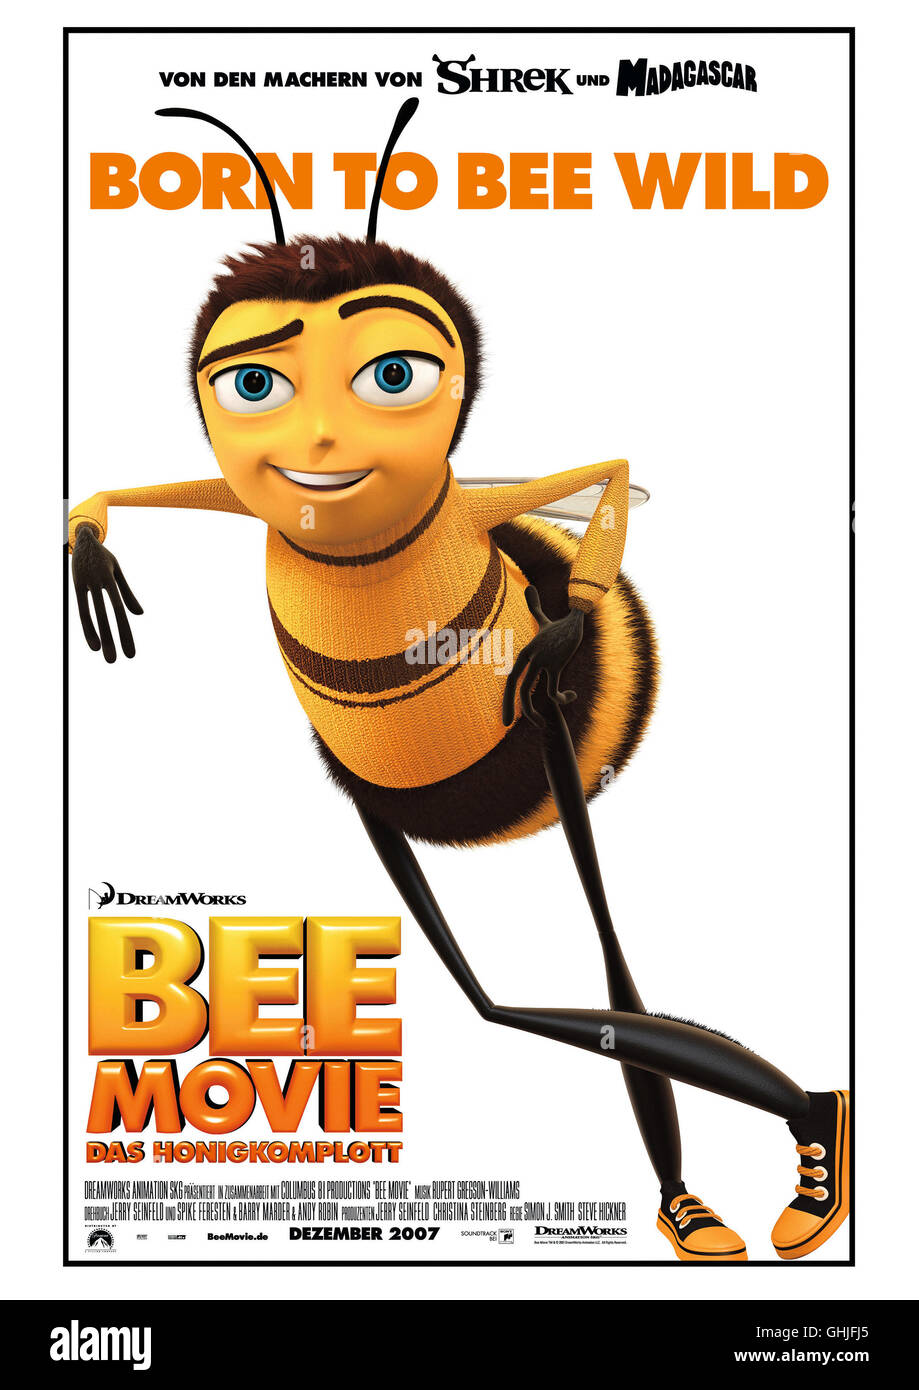 Bee Movie - Das Honigkomplott / Filmplakat Regie: Simon J. Smith aka. Bee Movie Stock Photo